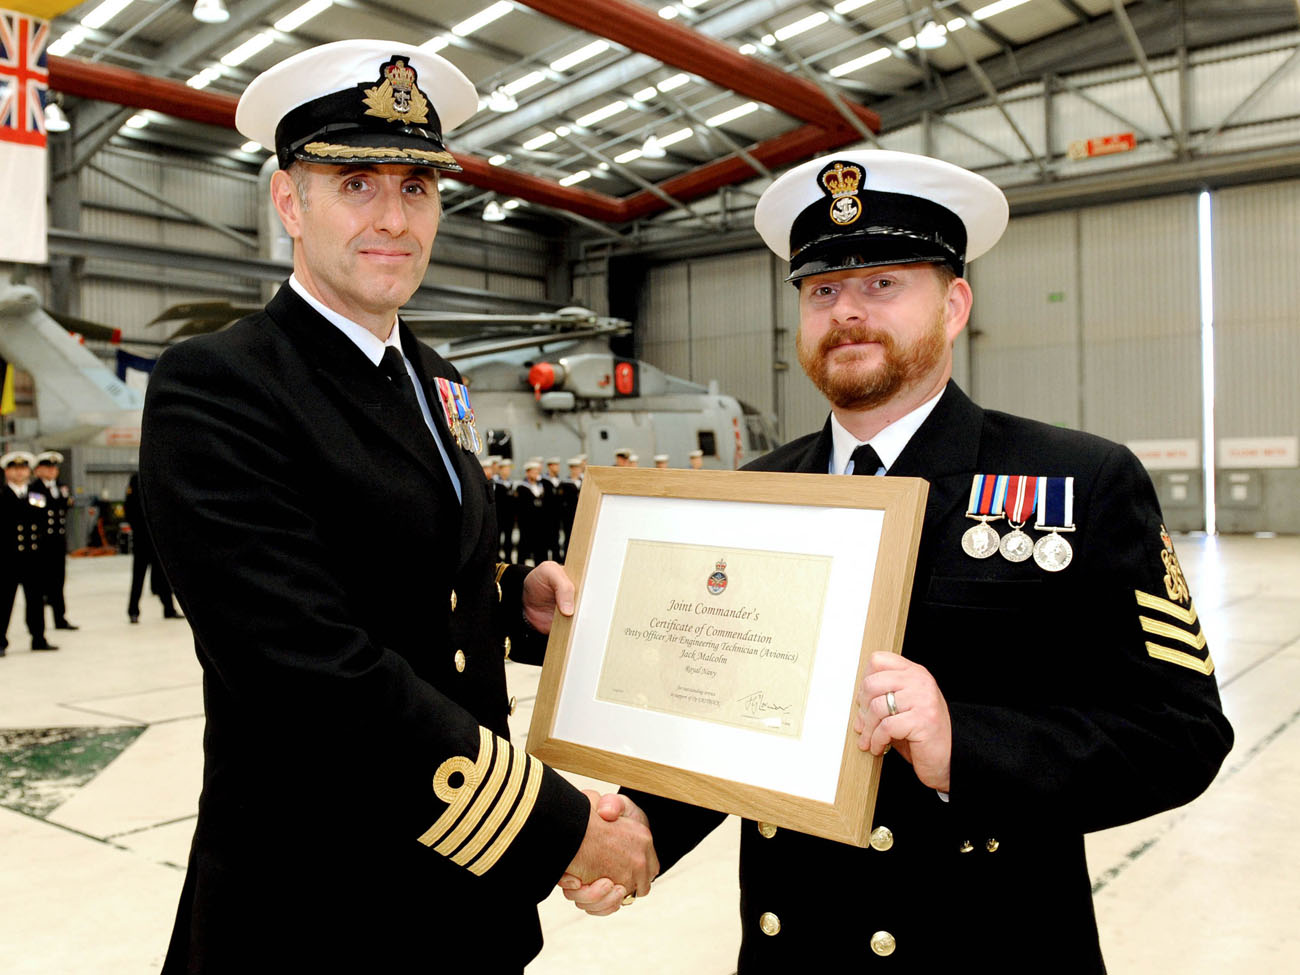 Commendations for Gritrock squadron sailors | Royal Navy